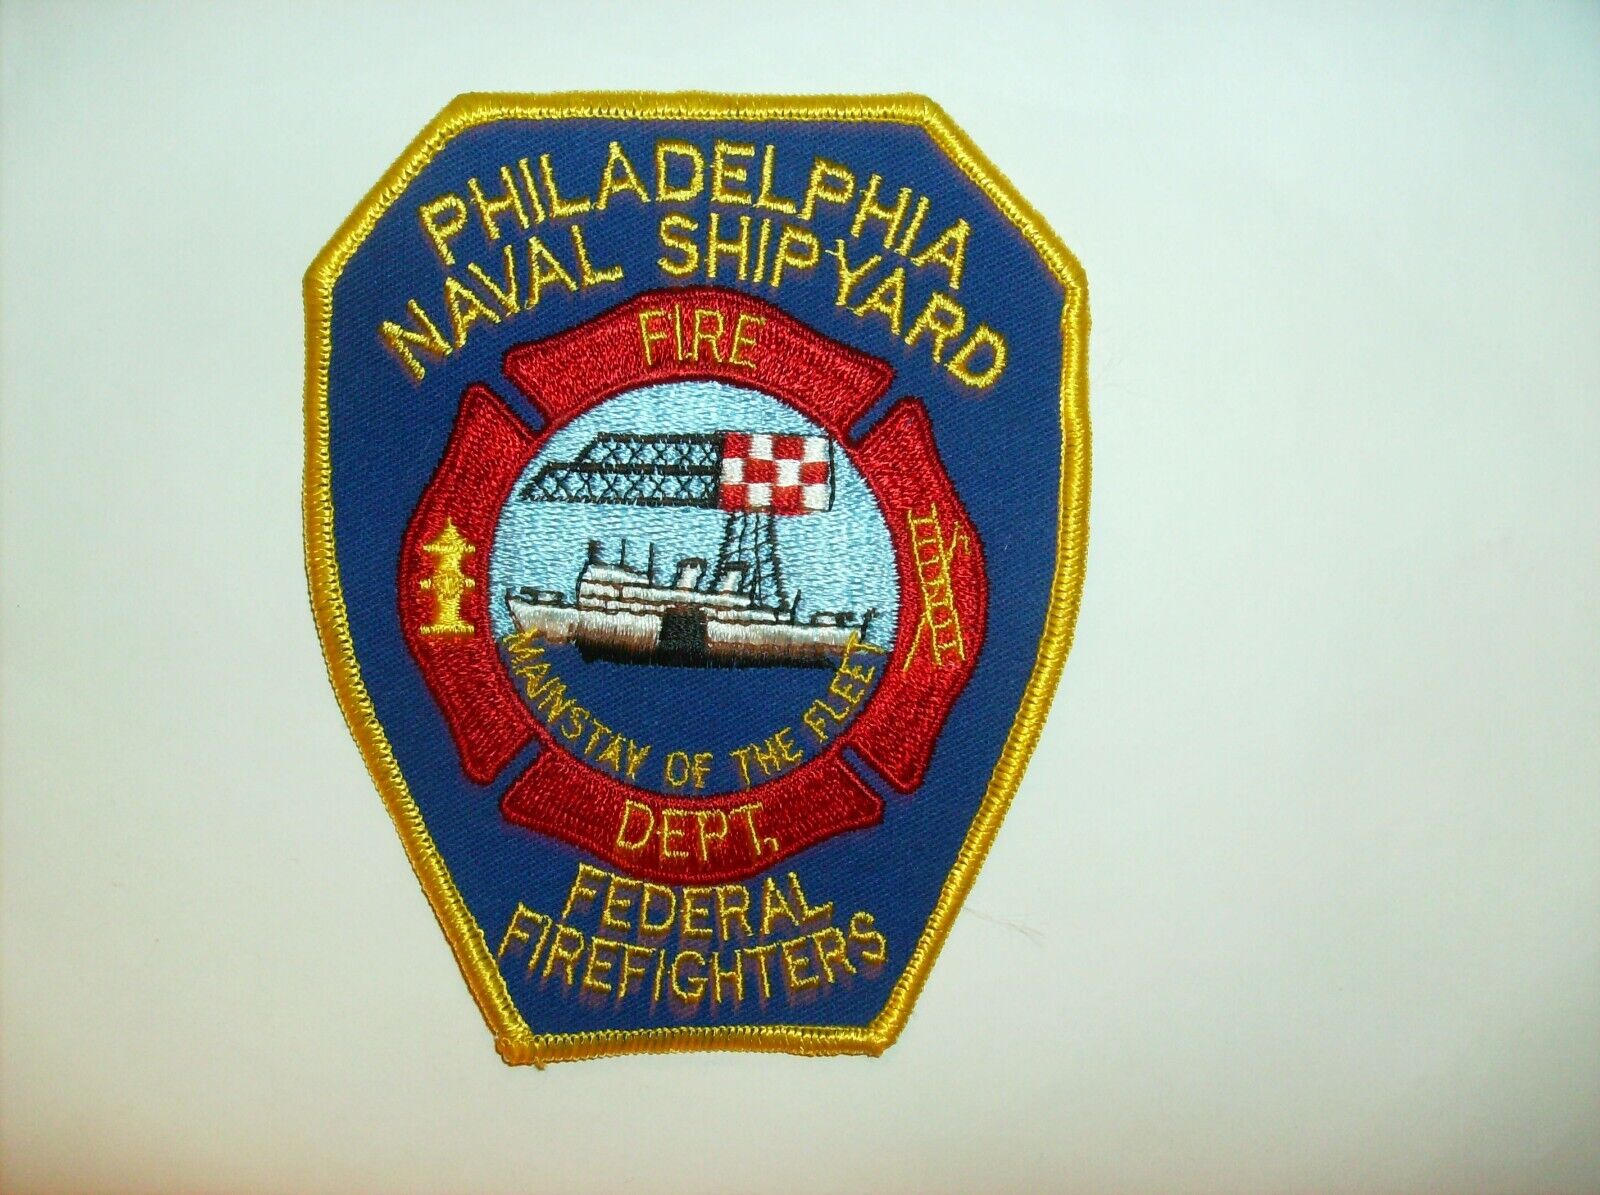 Philadelphia Naval Shipyard Federal Firefighters Fire Dept. Patch